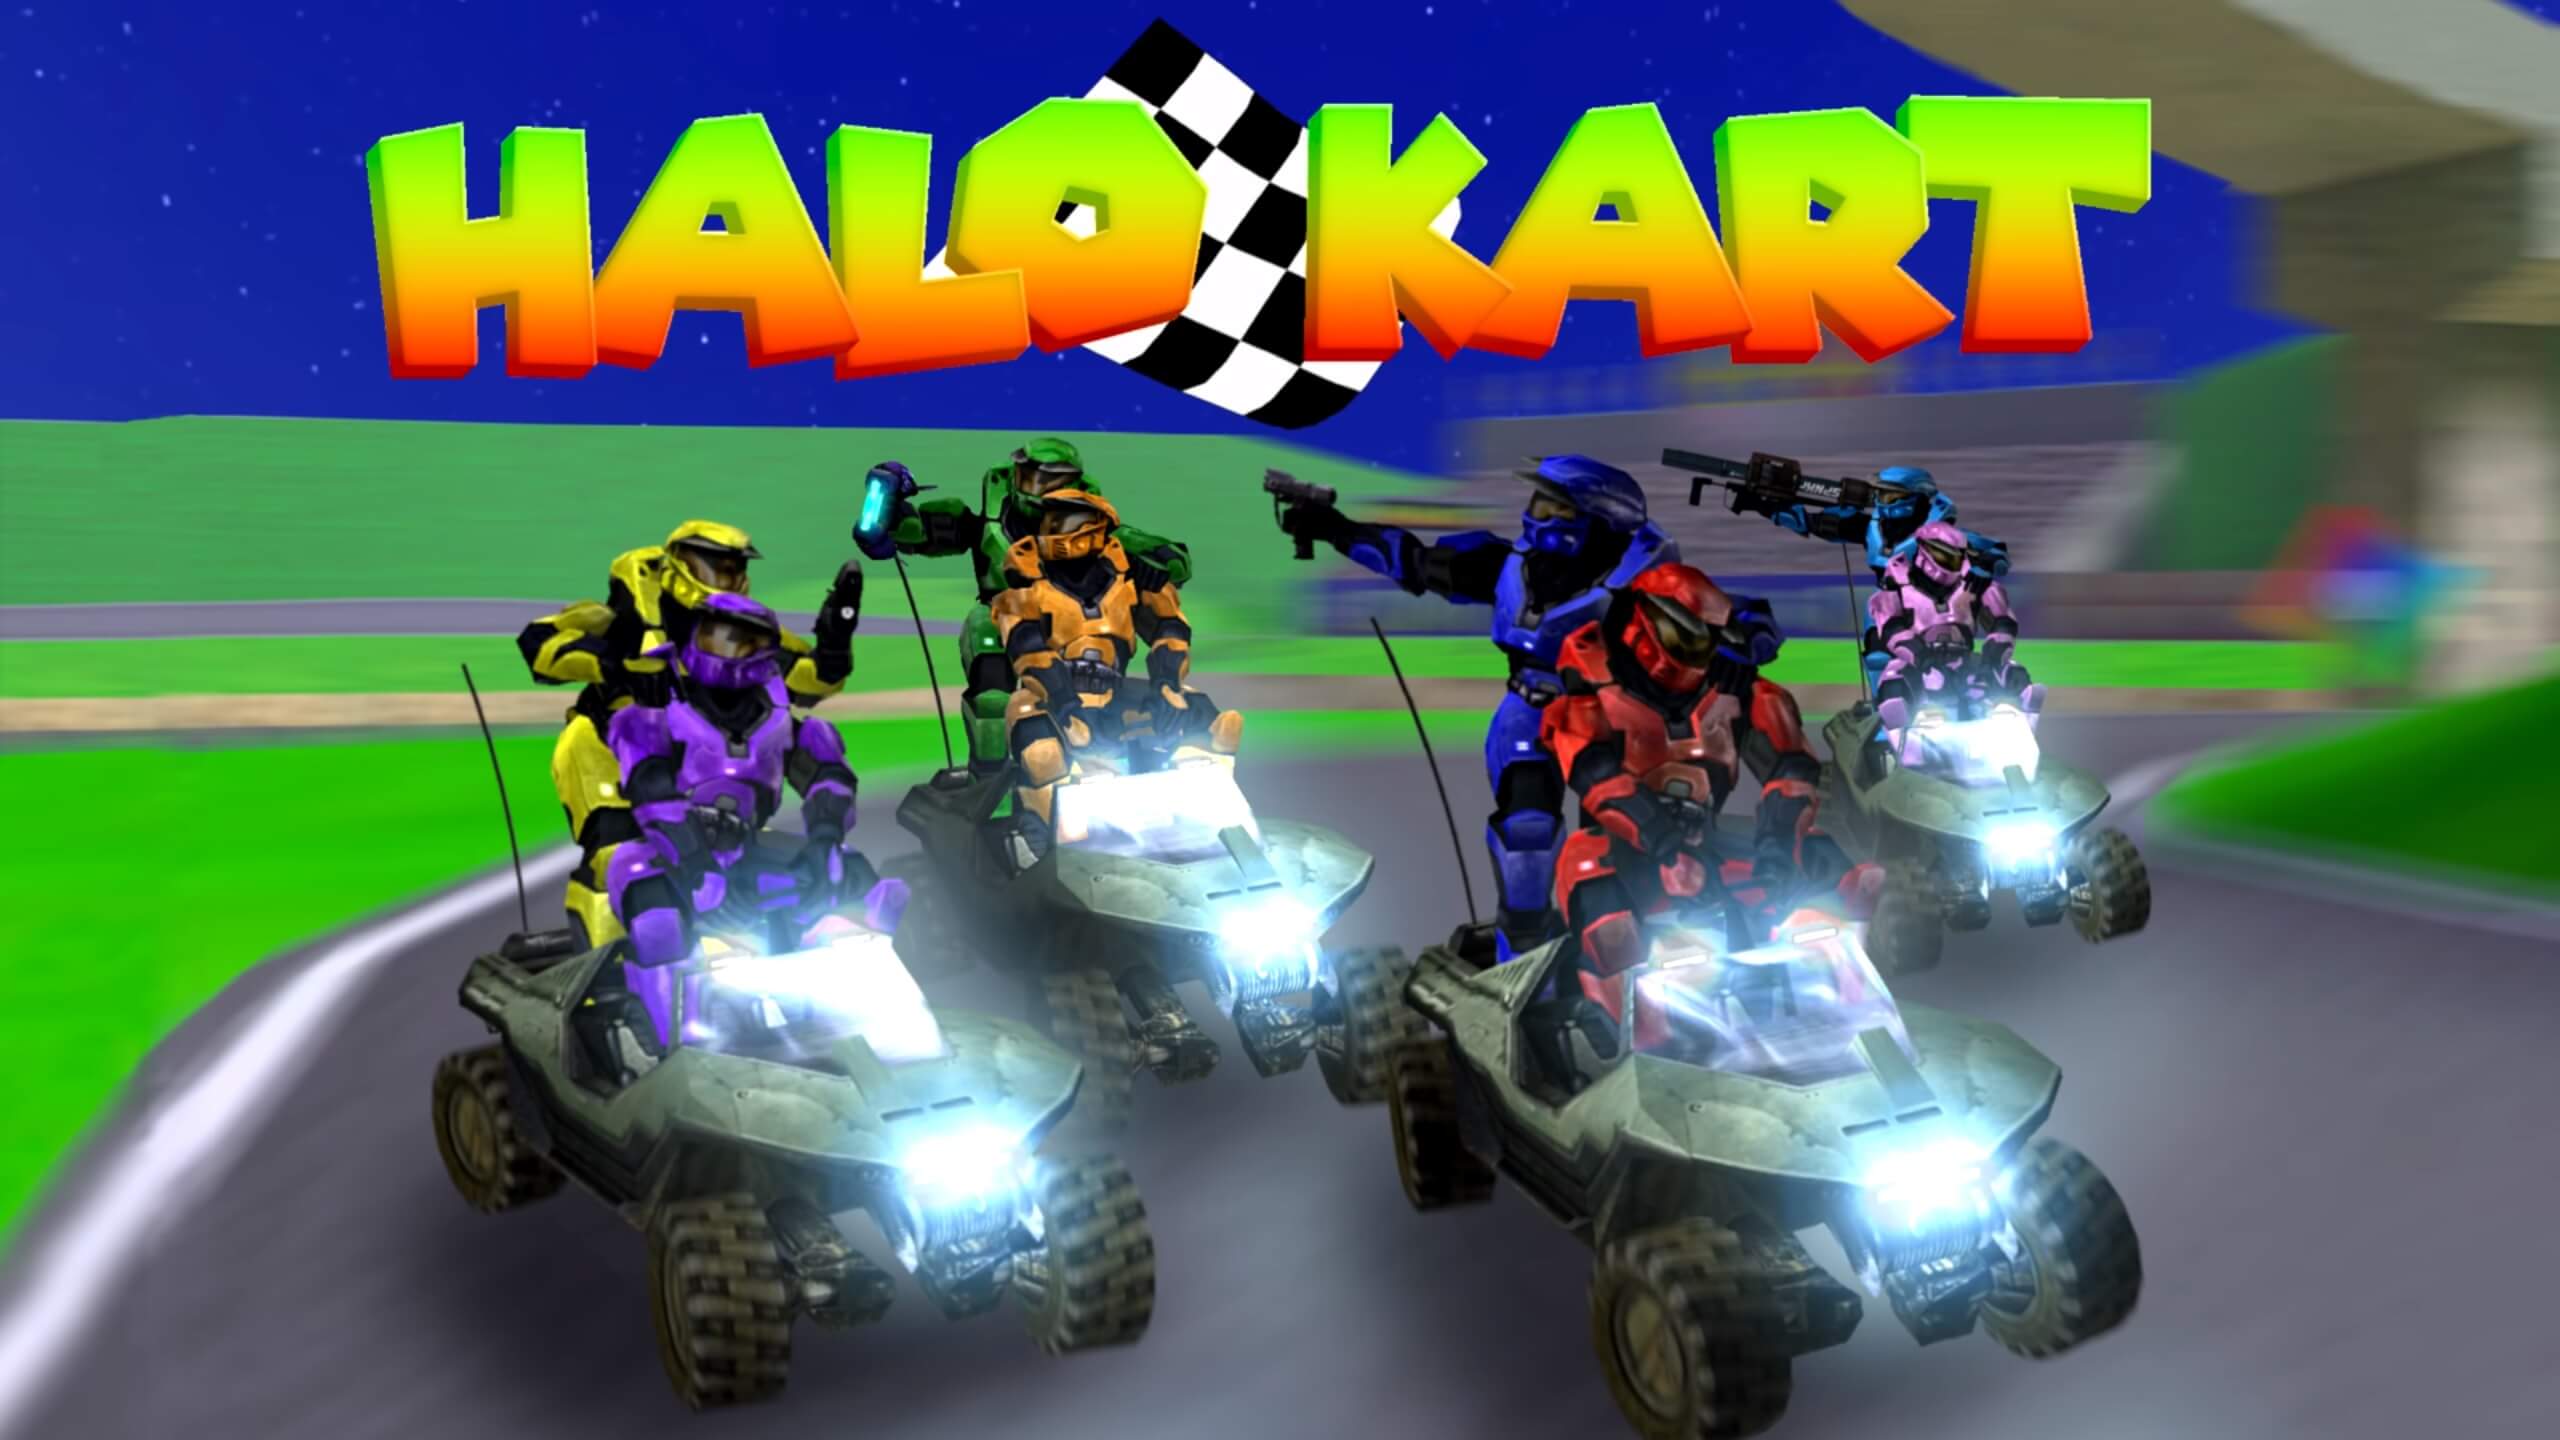 Halo-Kart-feature.jpg